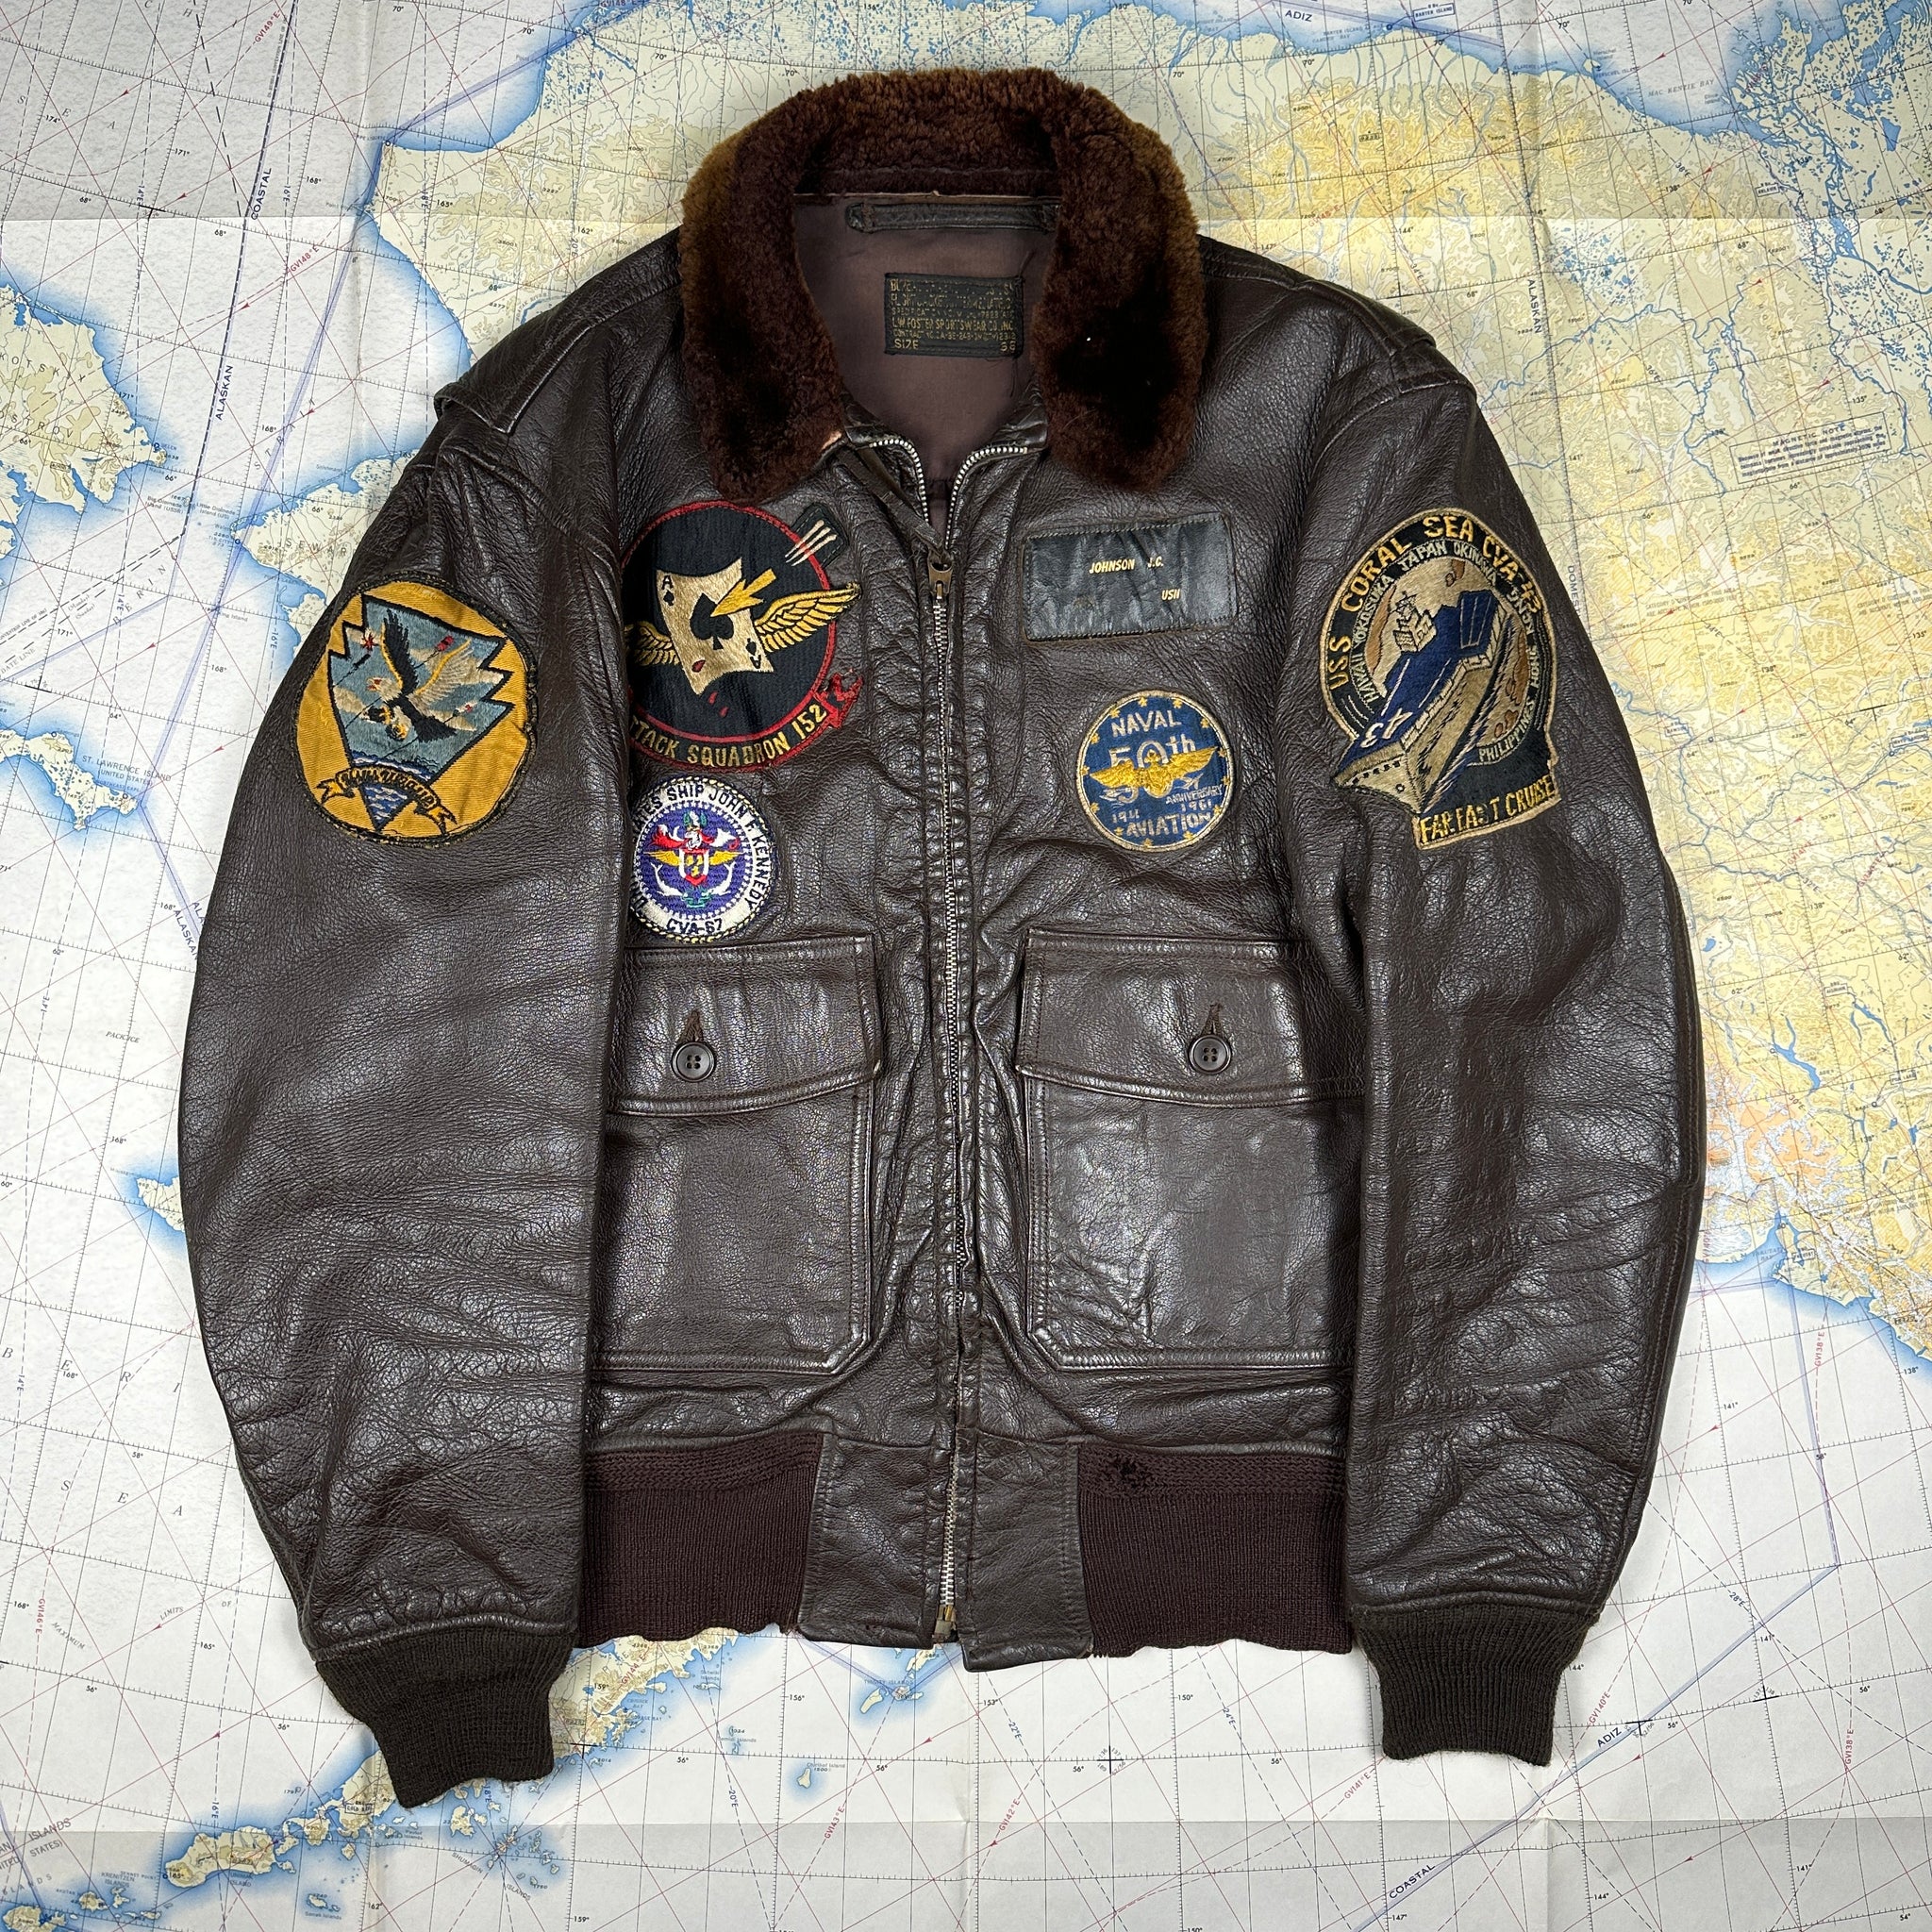 us-navy-g1-flight-jacket-patched-3_1024x1024@2x.jpg